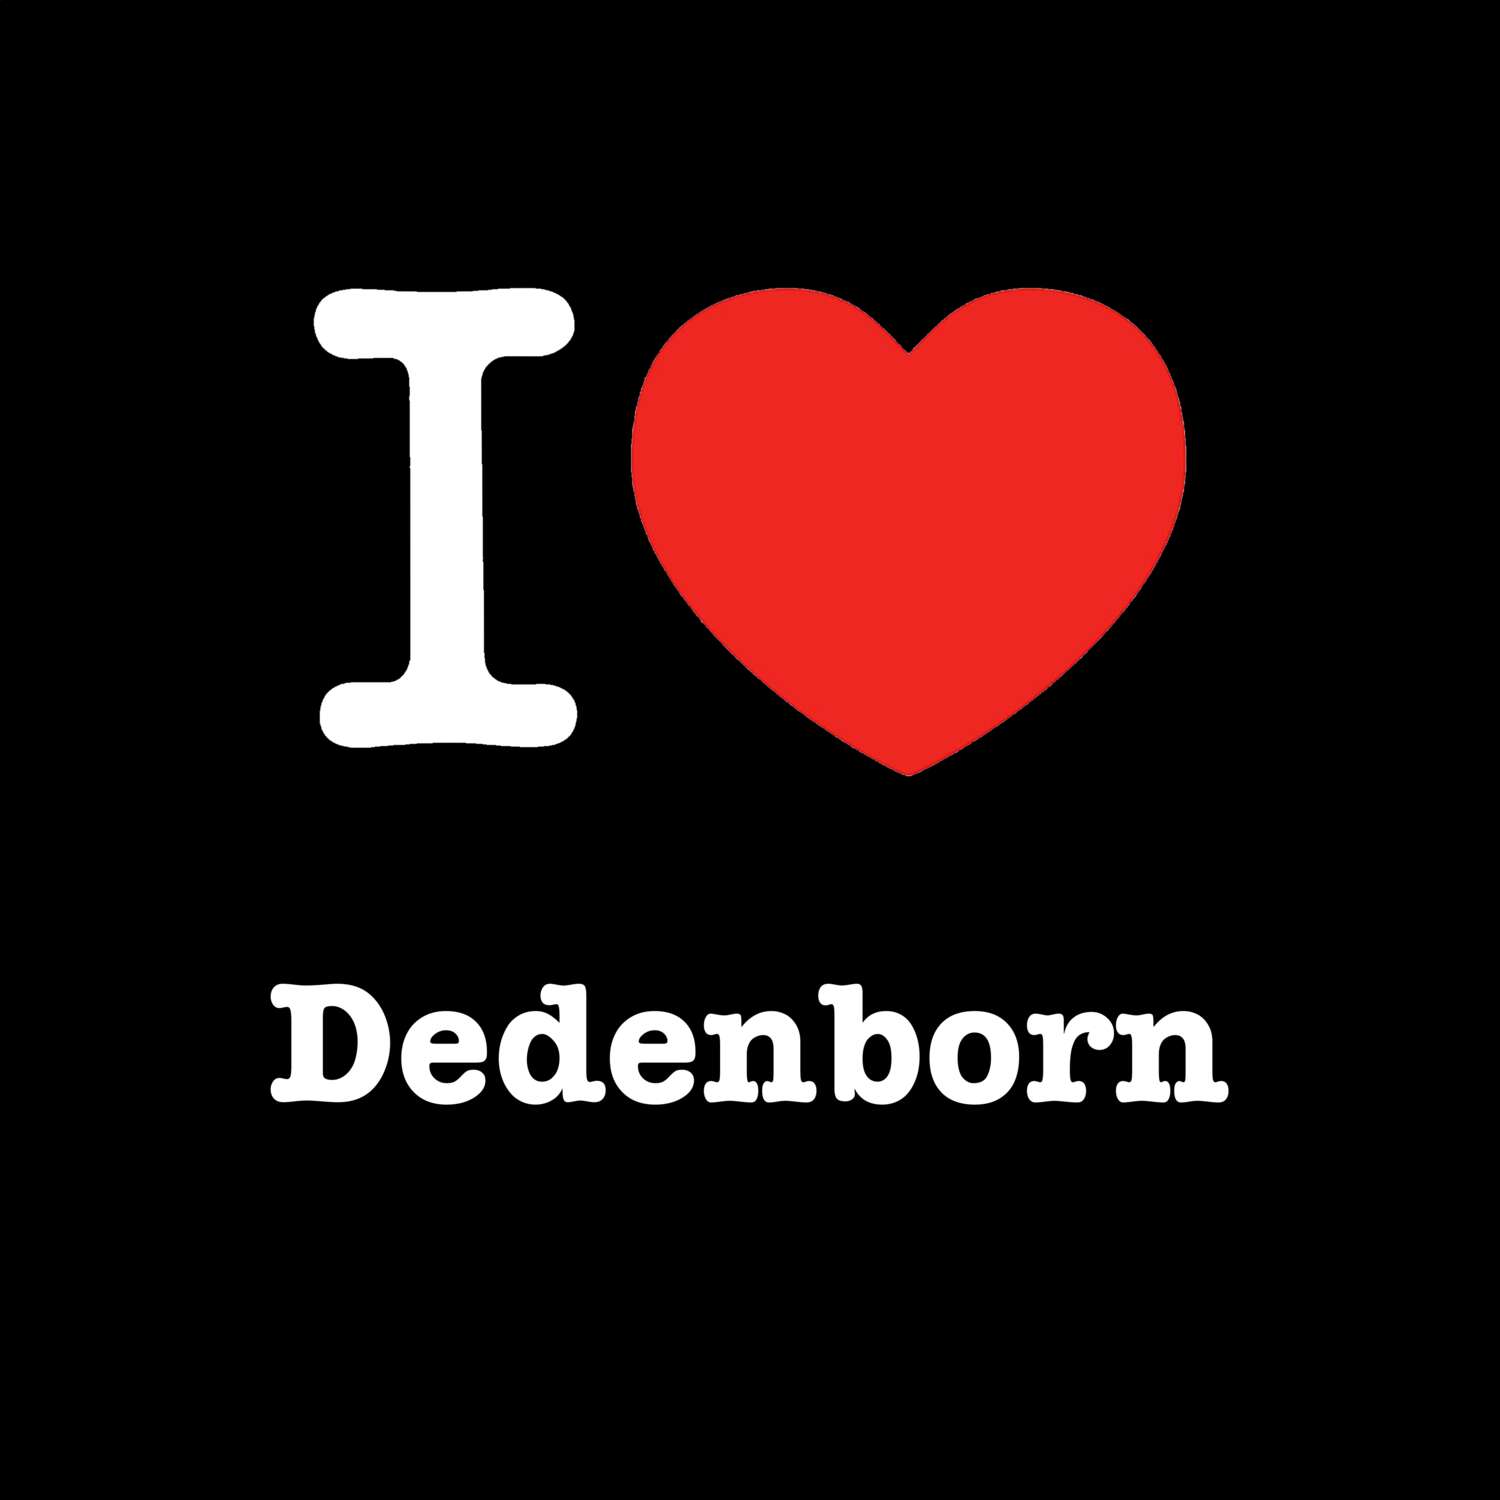 Dedenborn T-Shirt »I love«